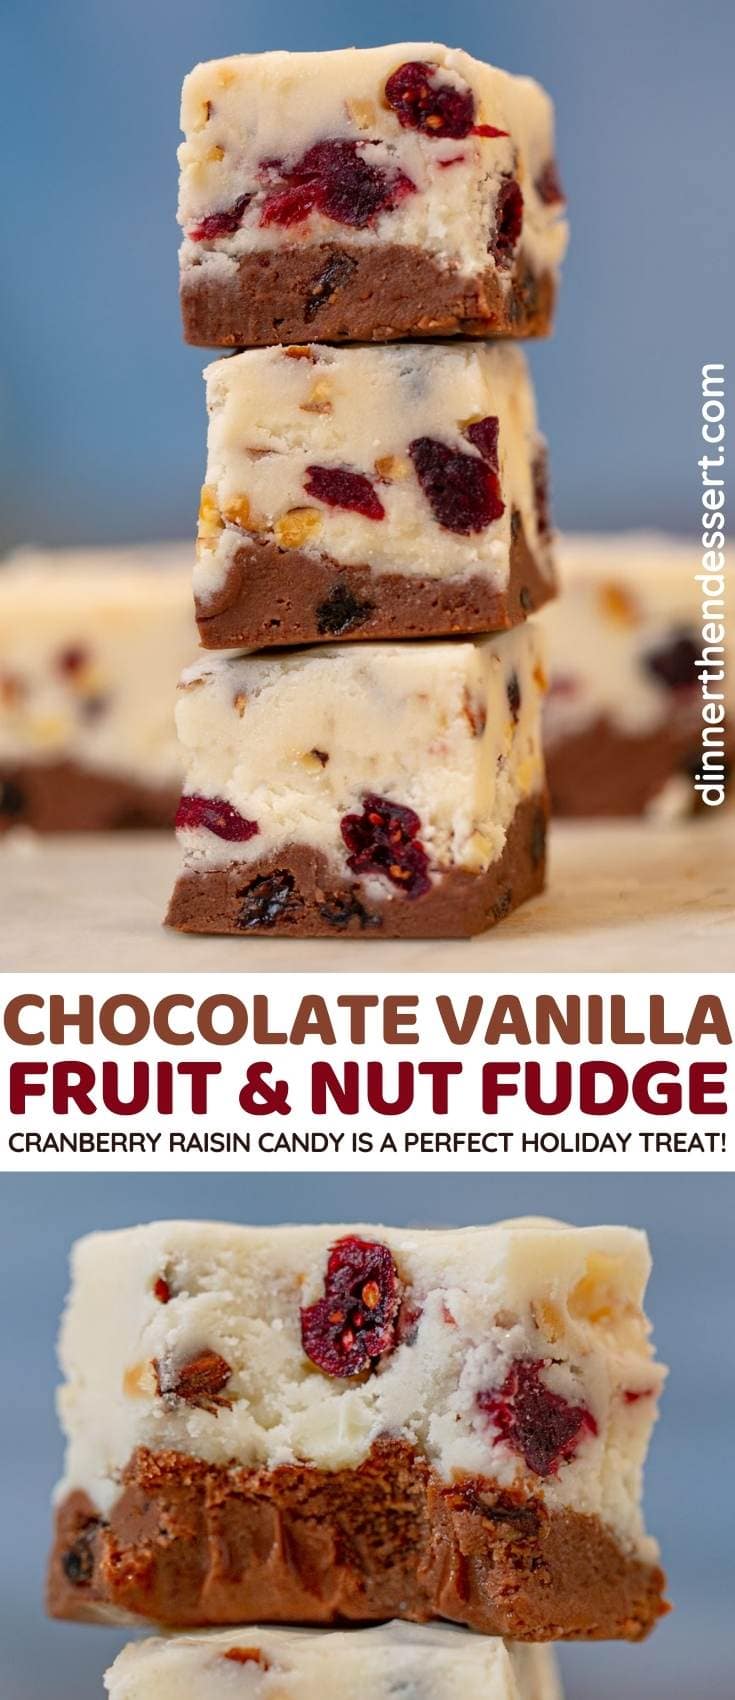 Chocolate Vanilla Fruit and Nut Fudge collage